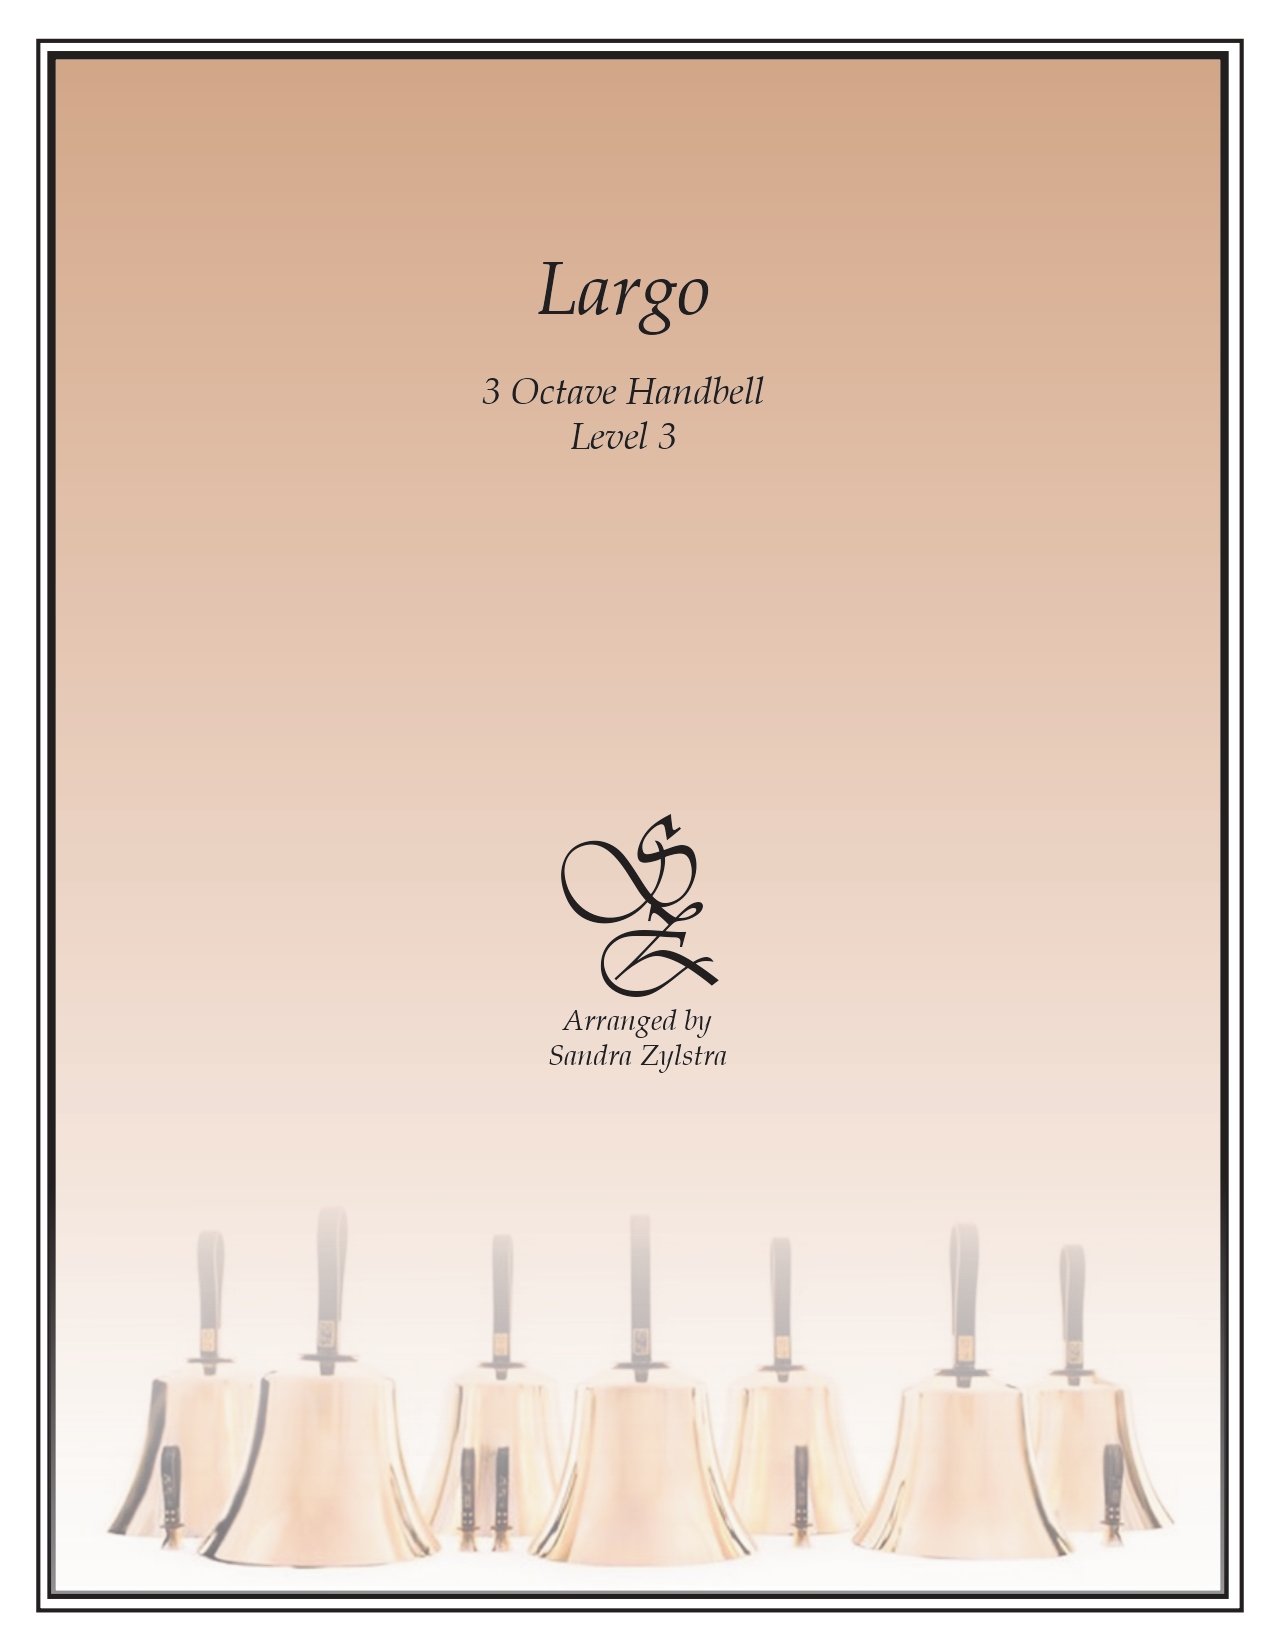 Largo 3 octave handbells cover page 00011